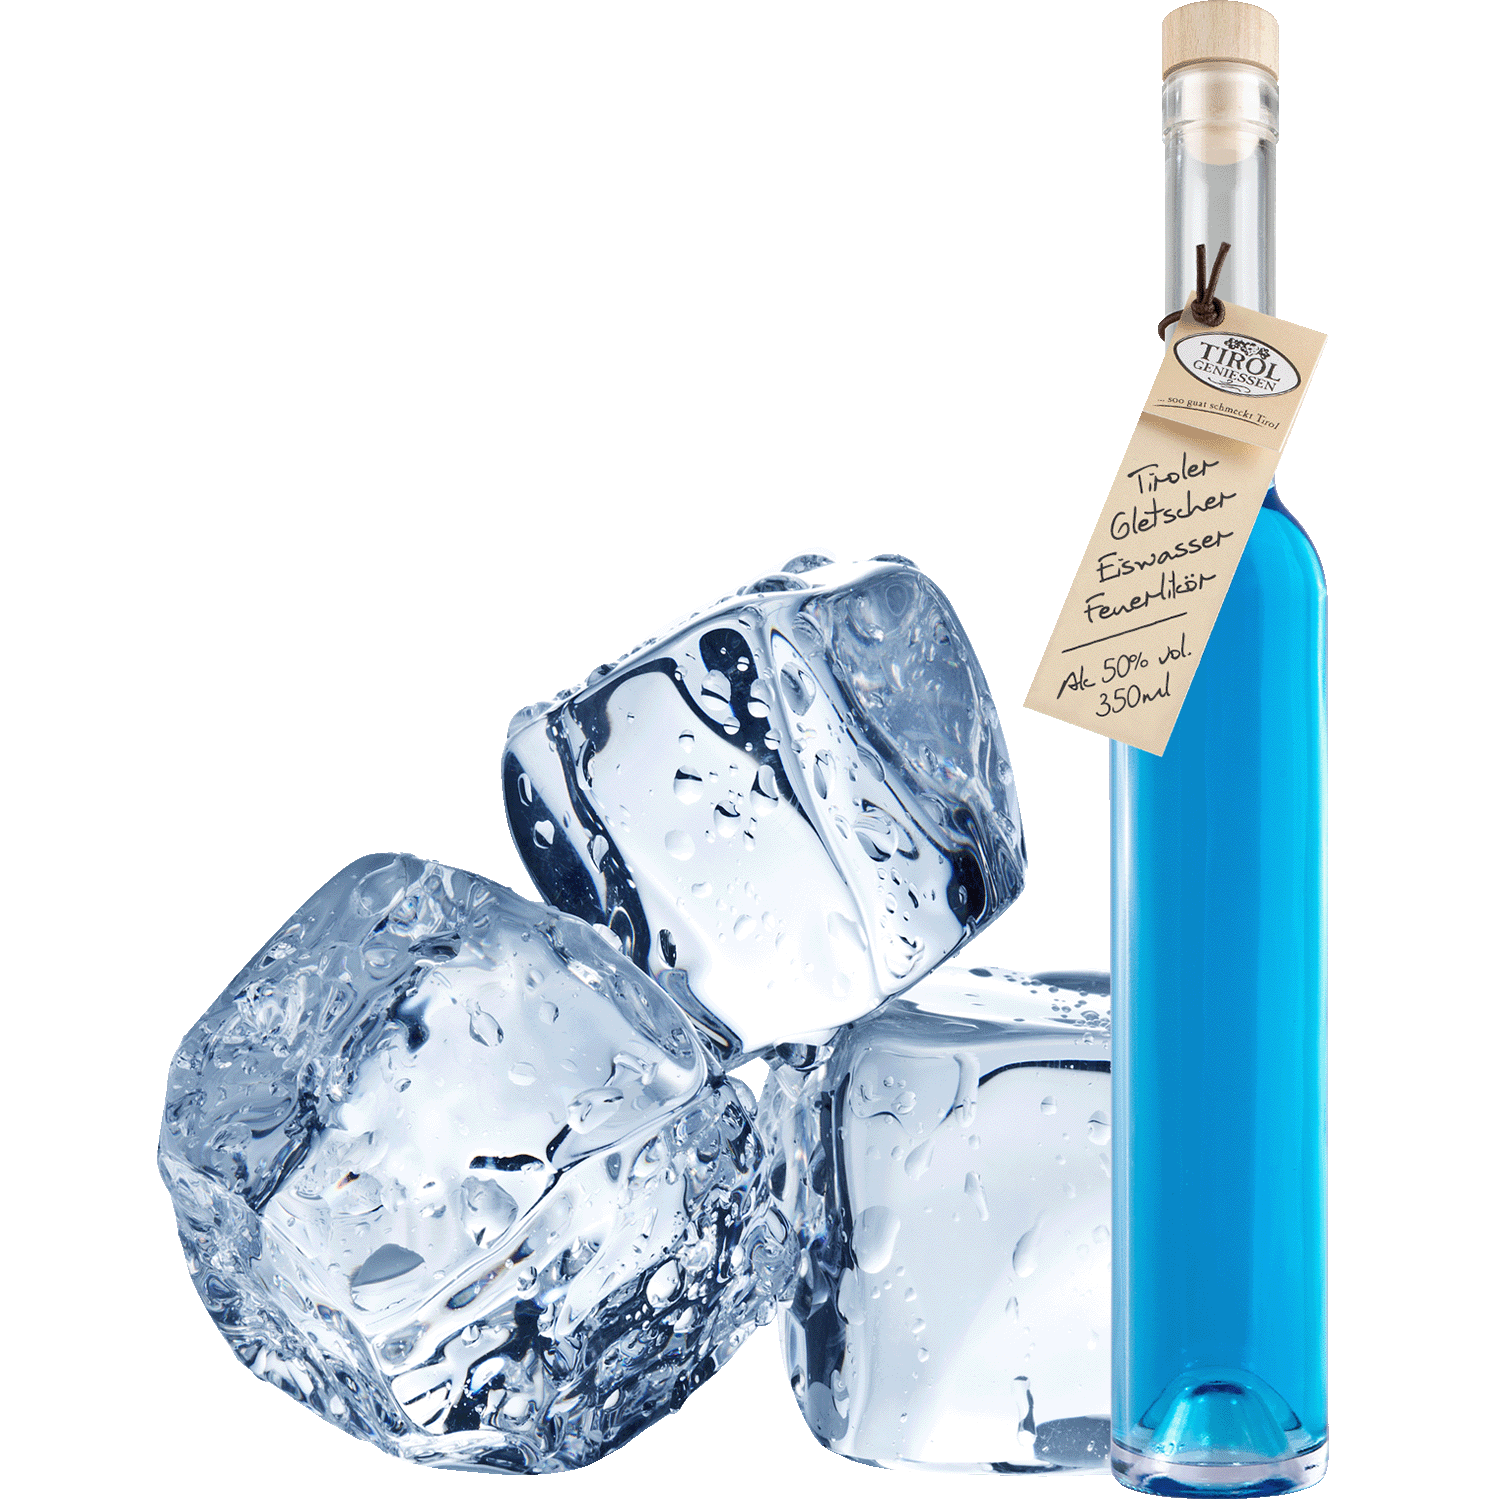 Glacier Ice Fire Liqueur in gift bottle from Austria from Tirol Geniessen